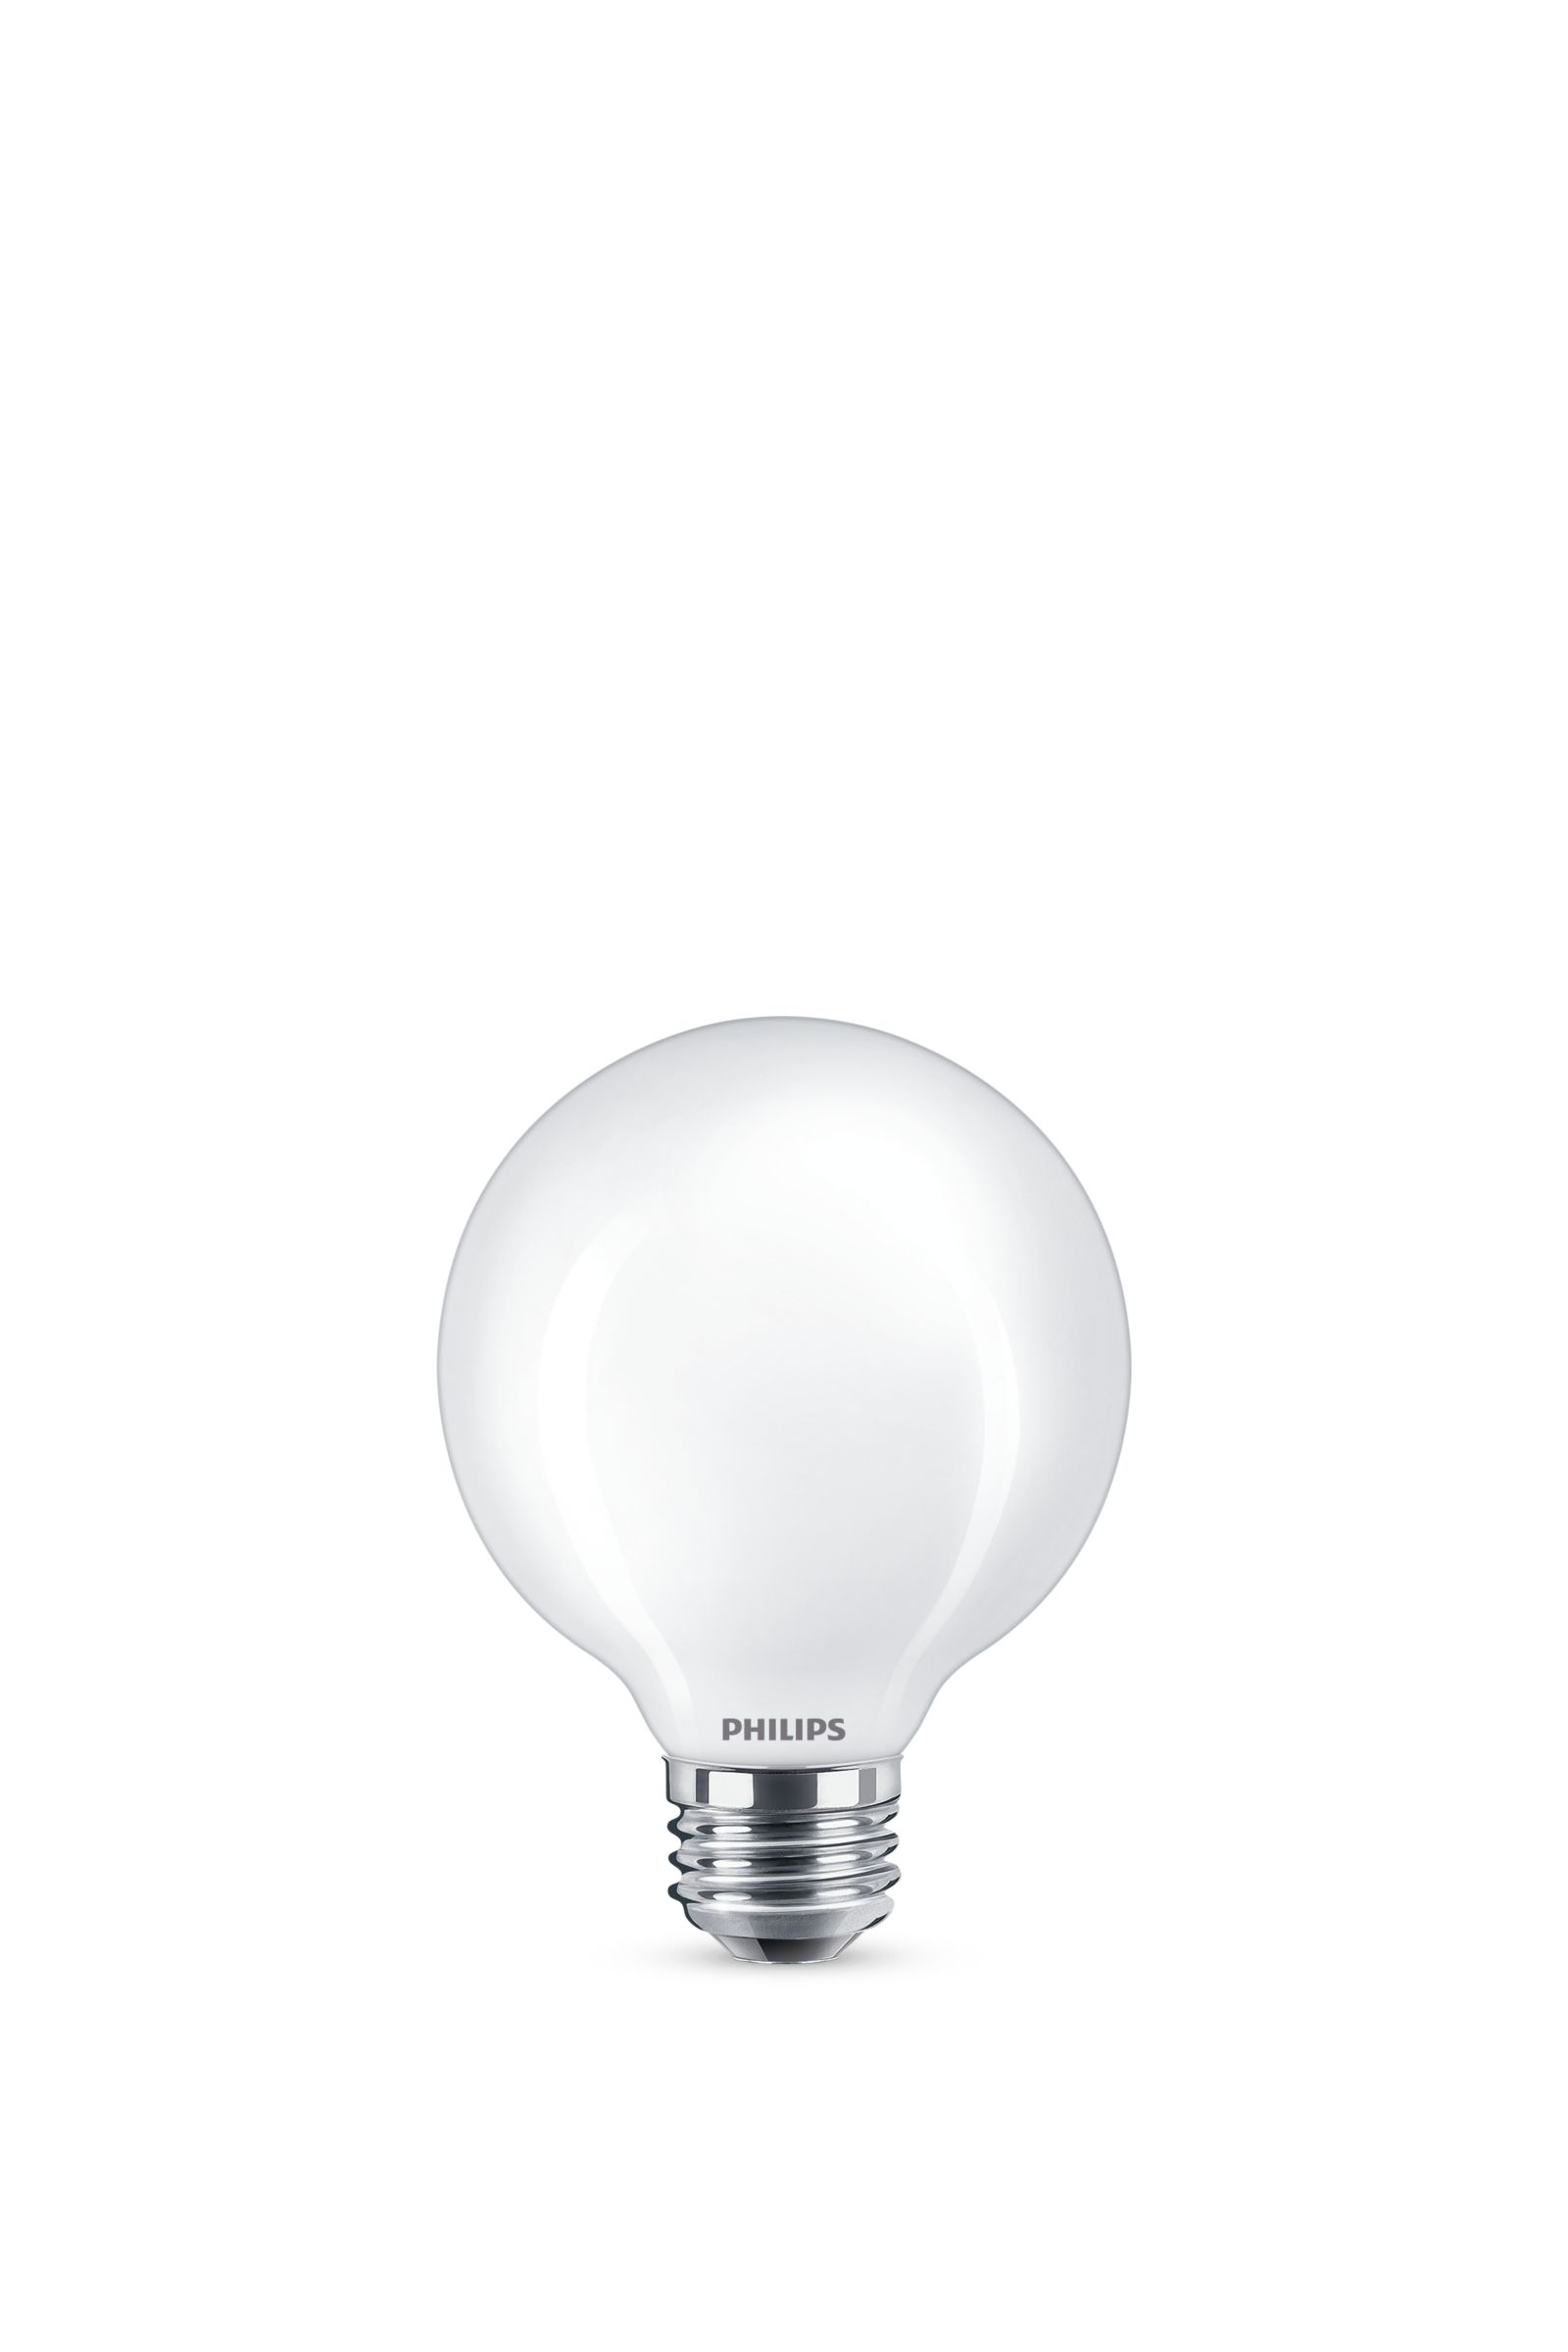 Philips B22 Stellar Bright White LED Bulb 16 W